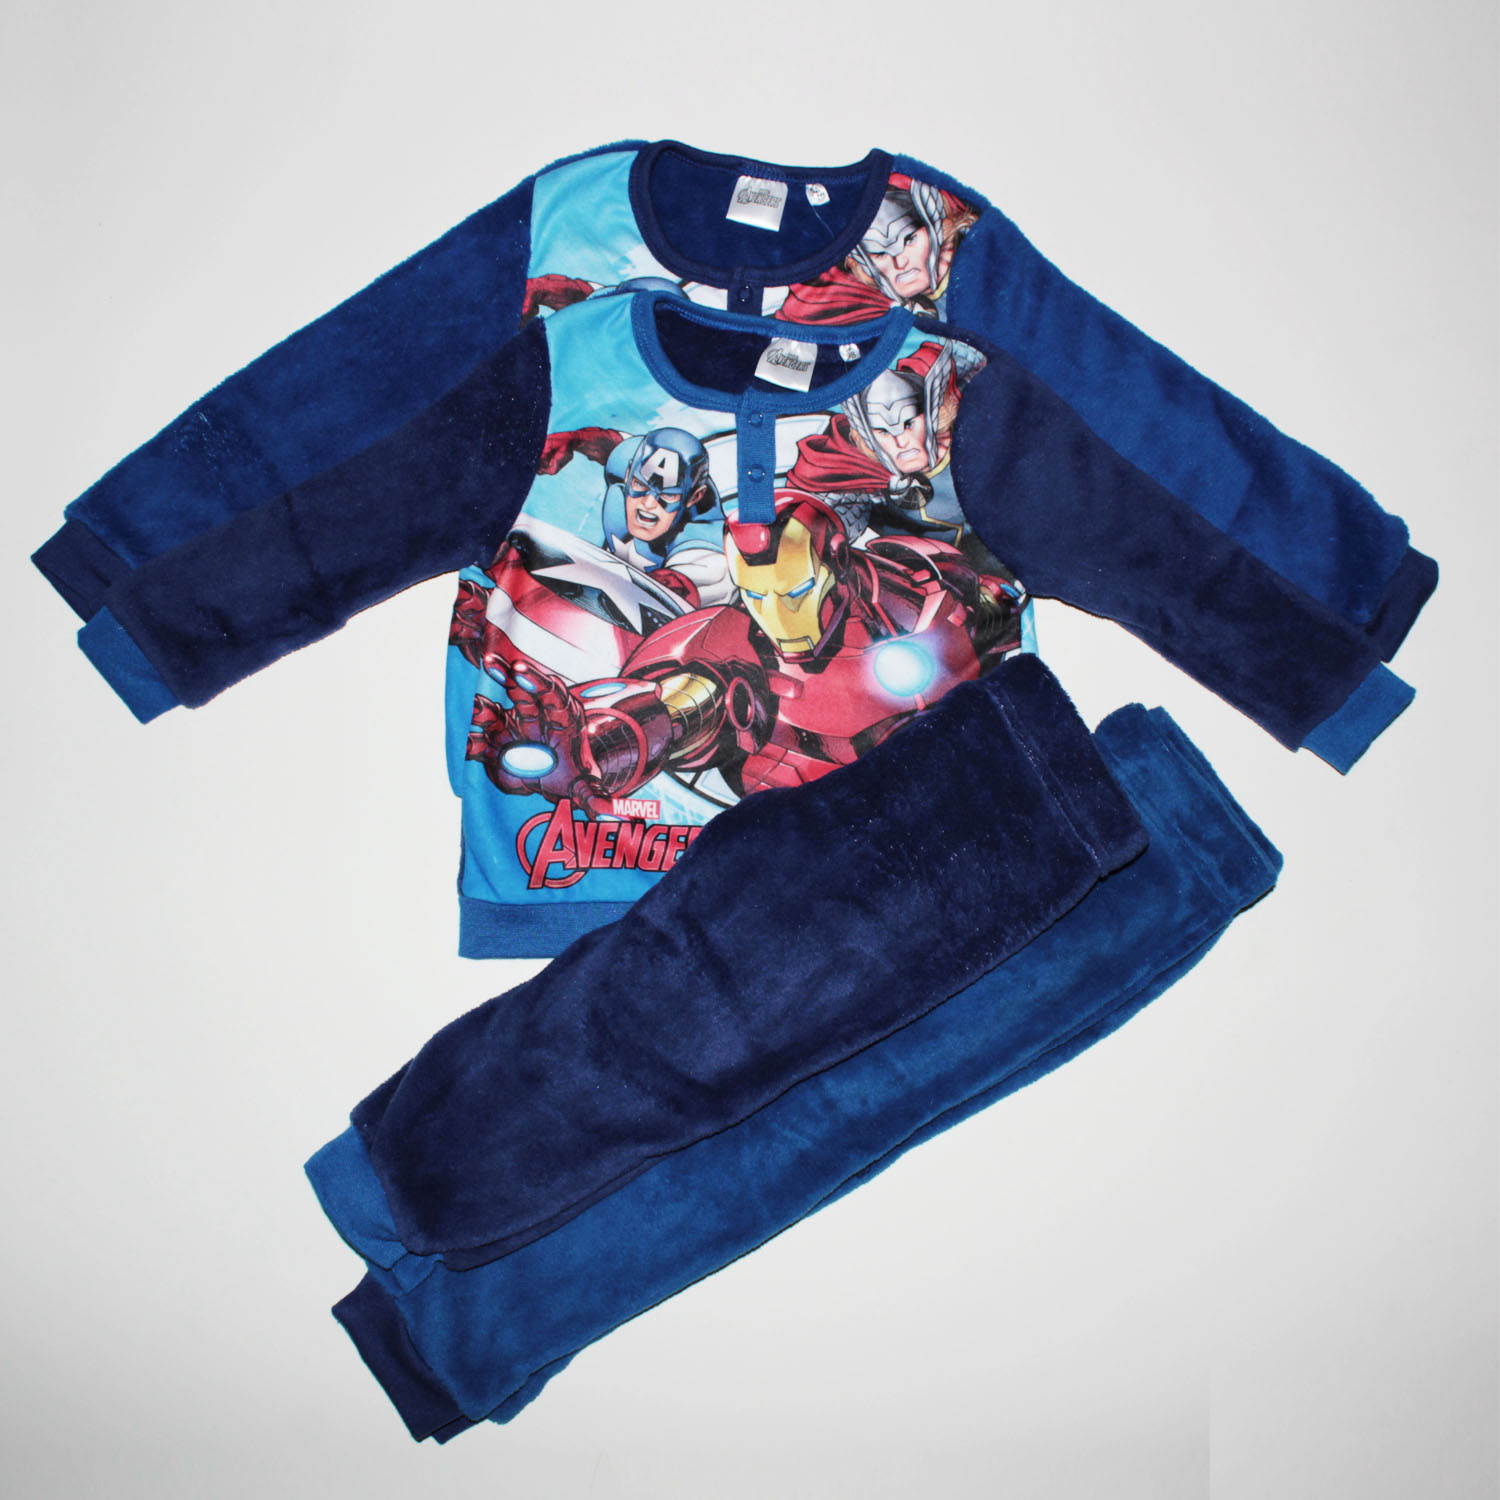 pijama vengadores para niño